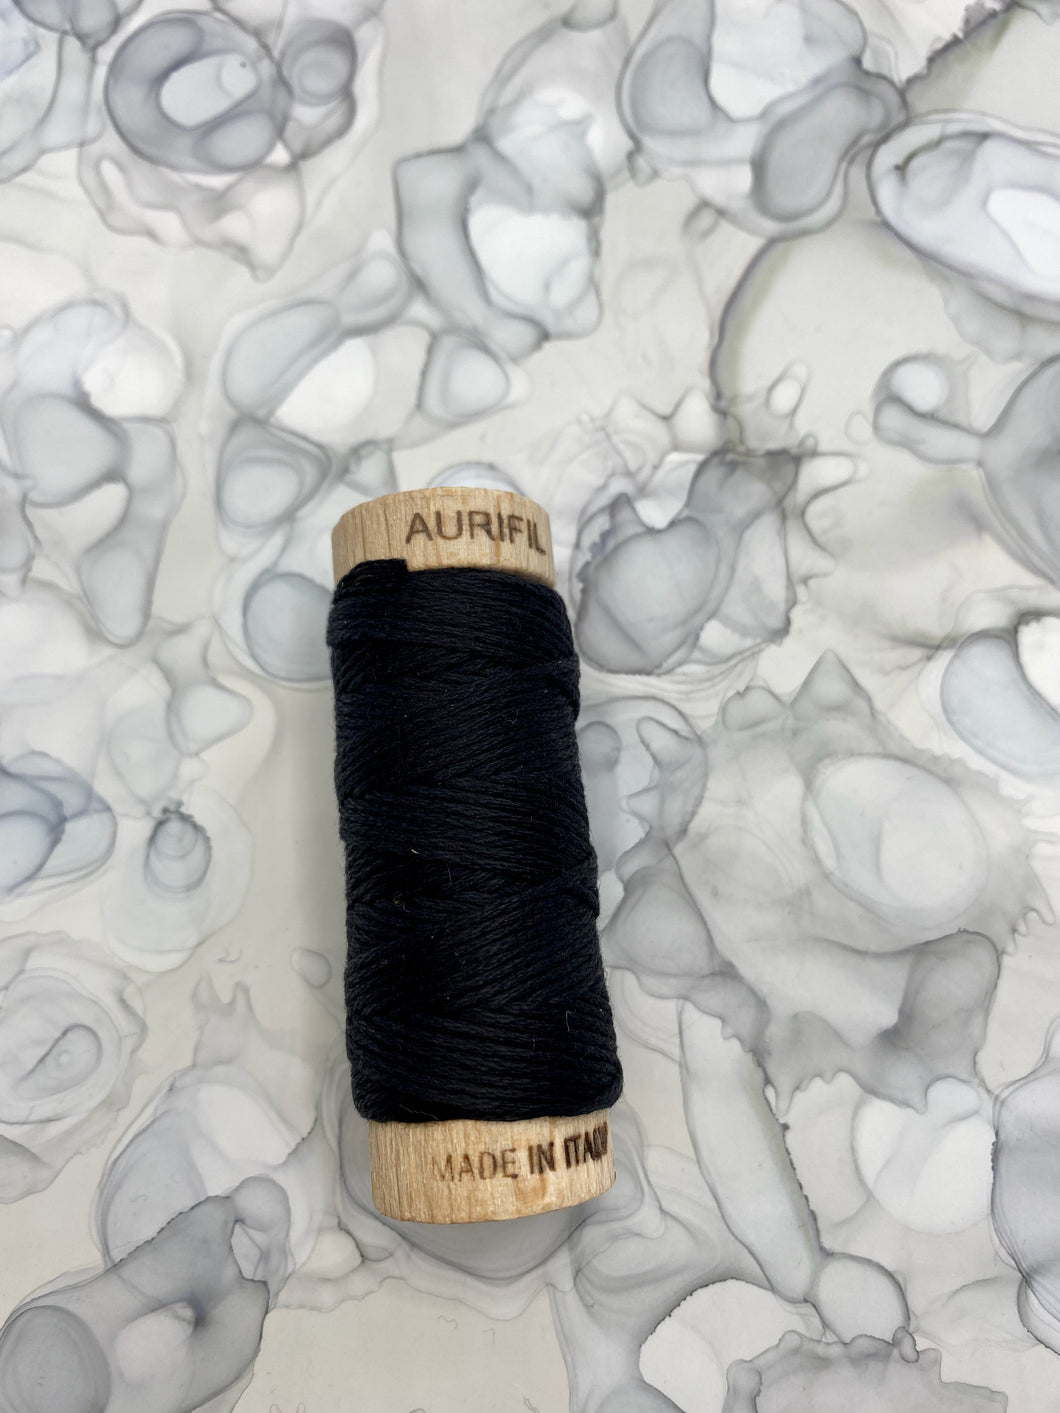 Aurifil 6 strand embroidery floss - Black (#2692)